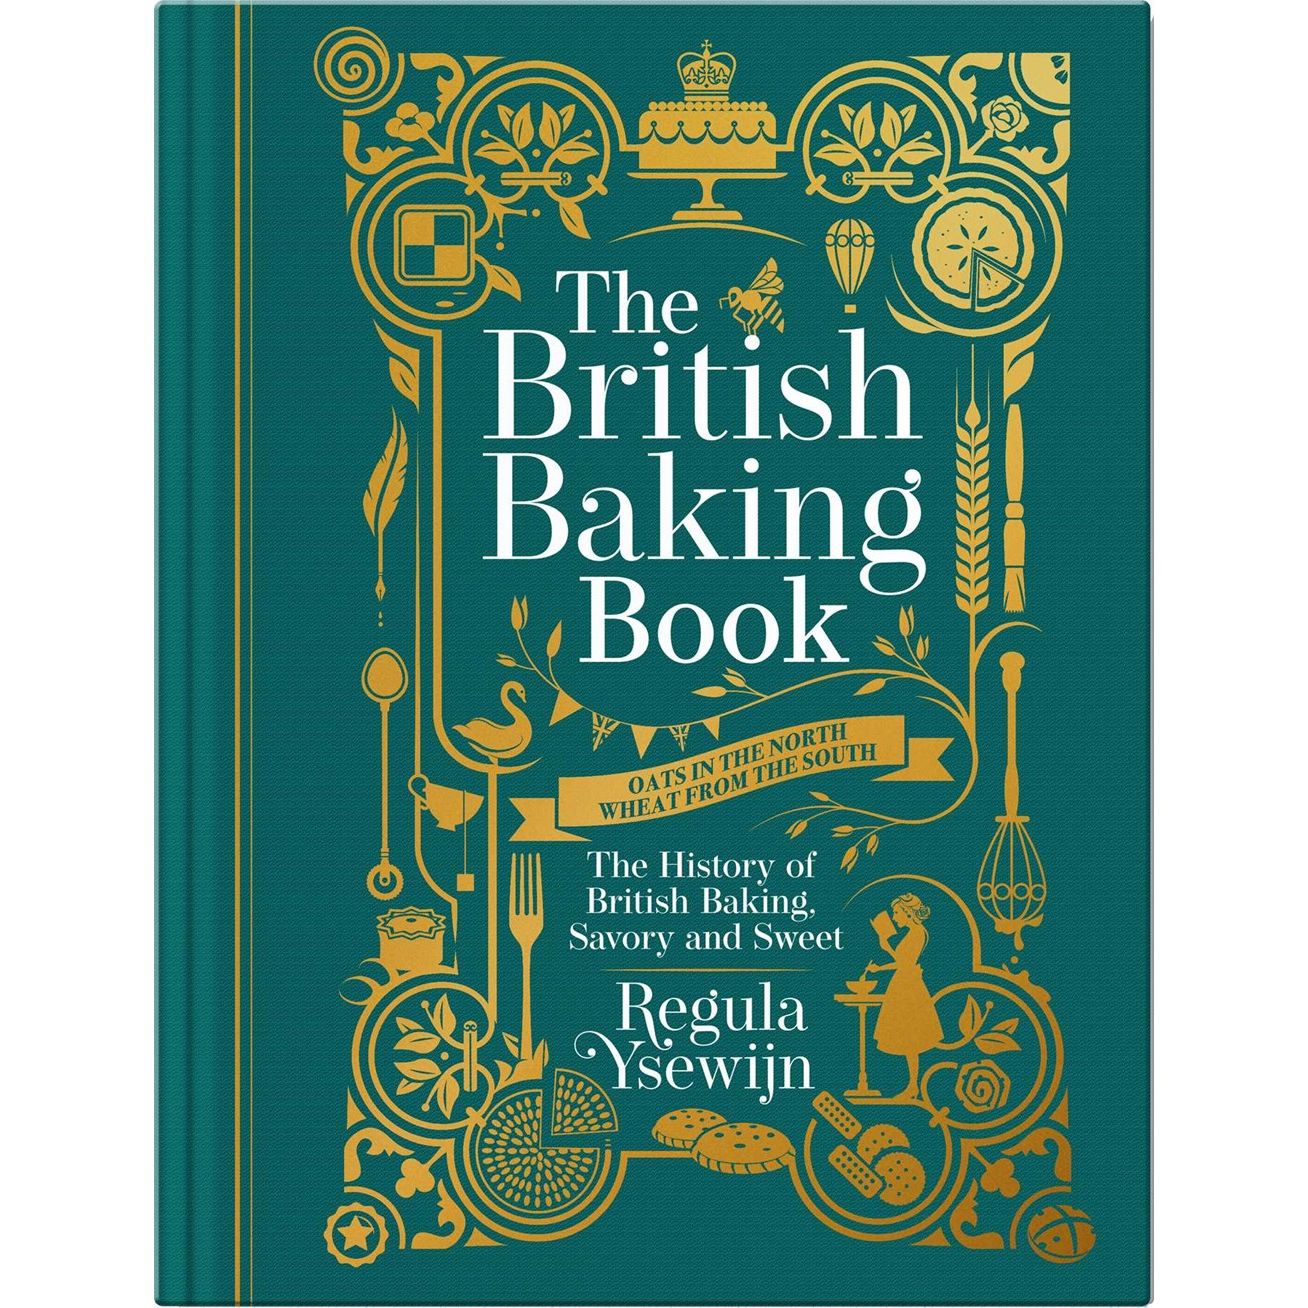 The British Baking Book (Regula Ysewijn)